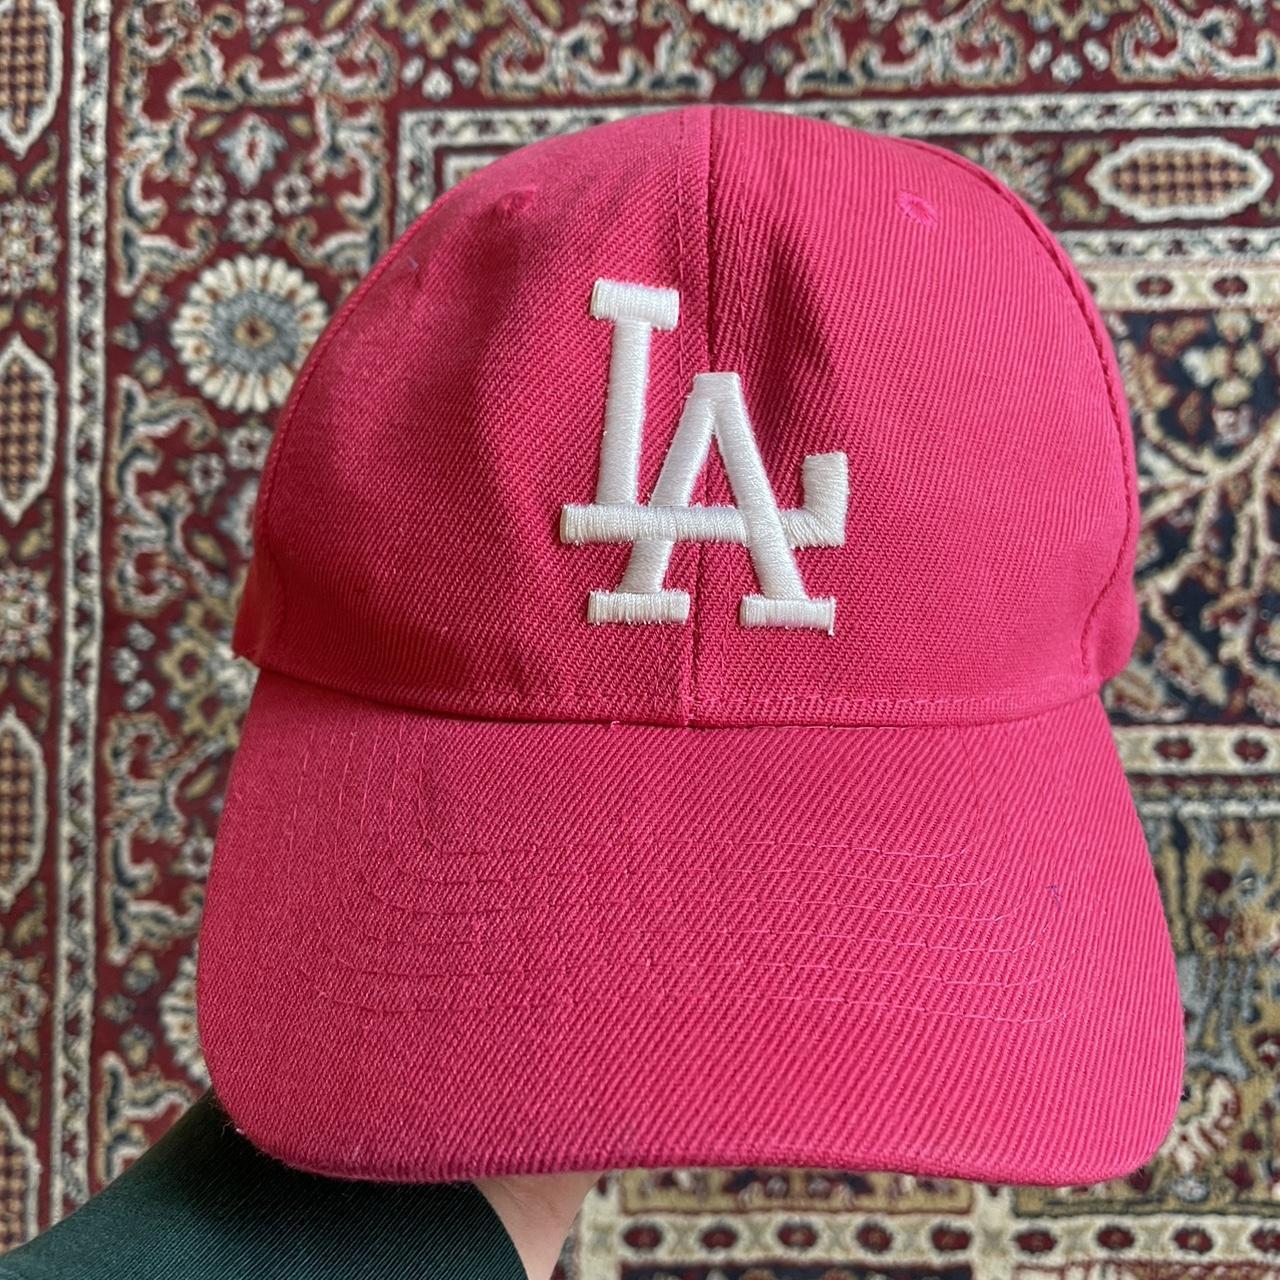 American Vintage Women's Caps - Pink